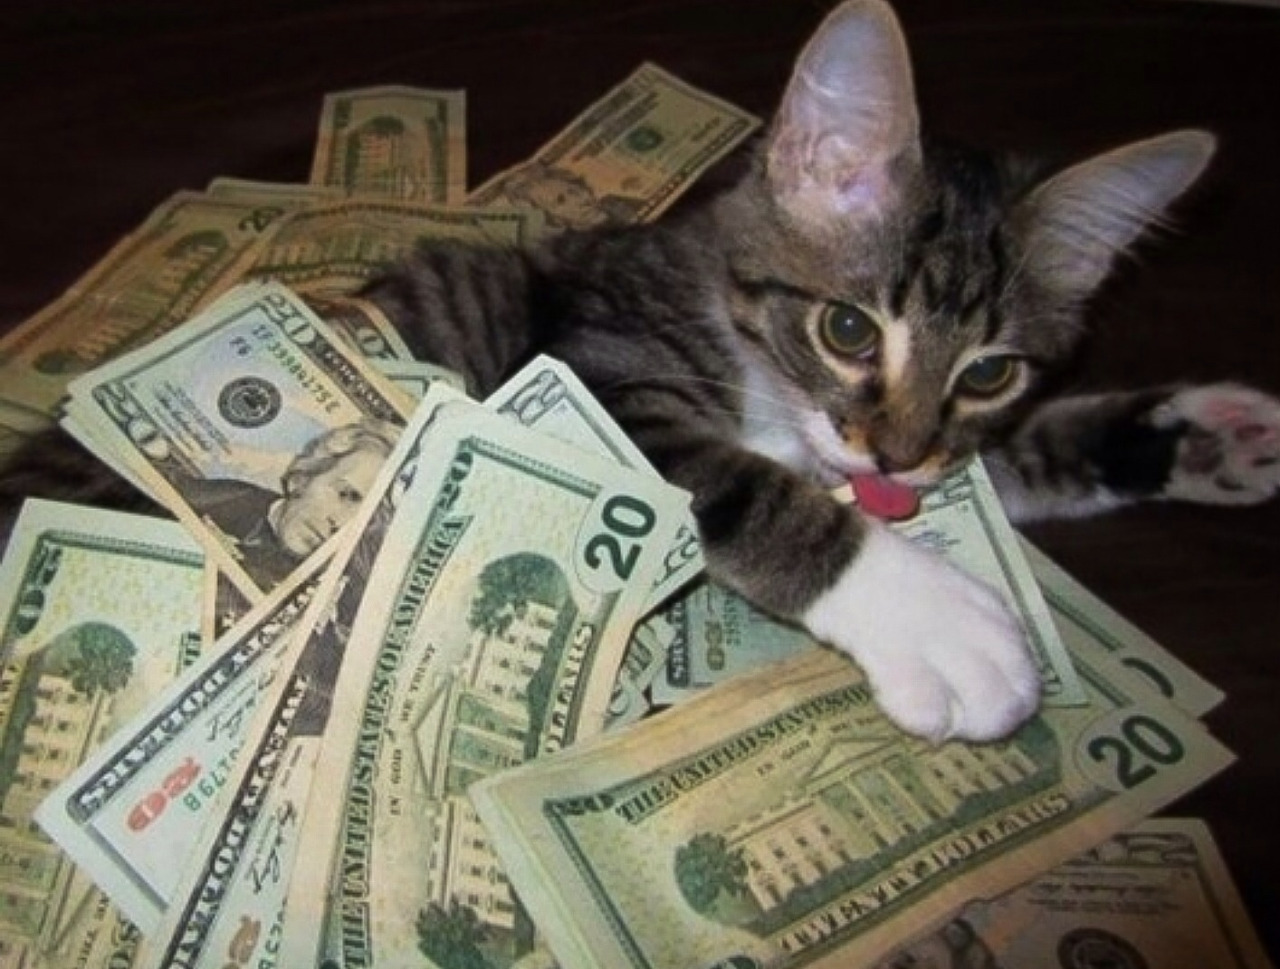 moneycat